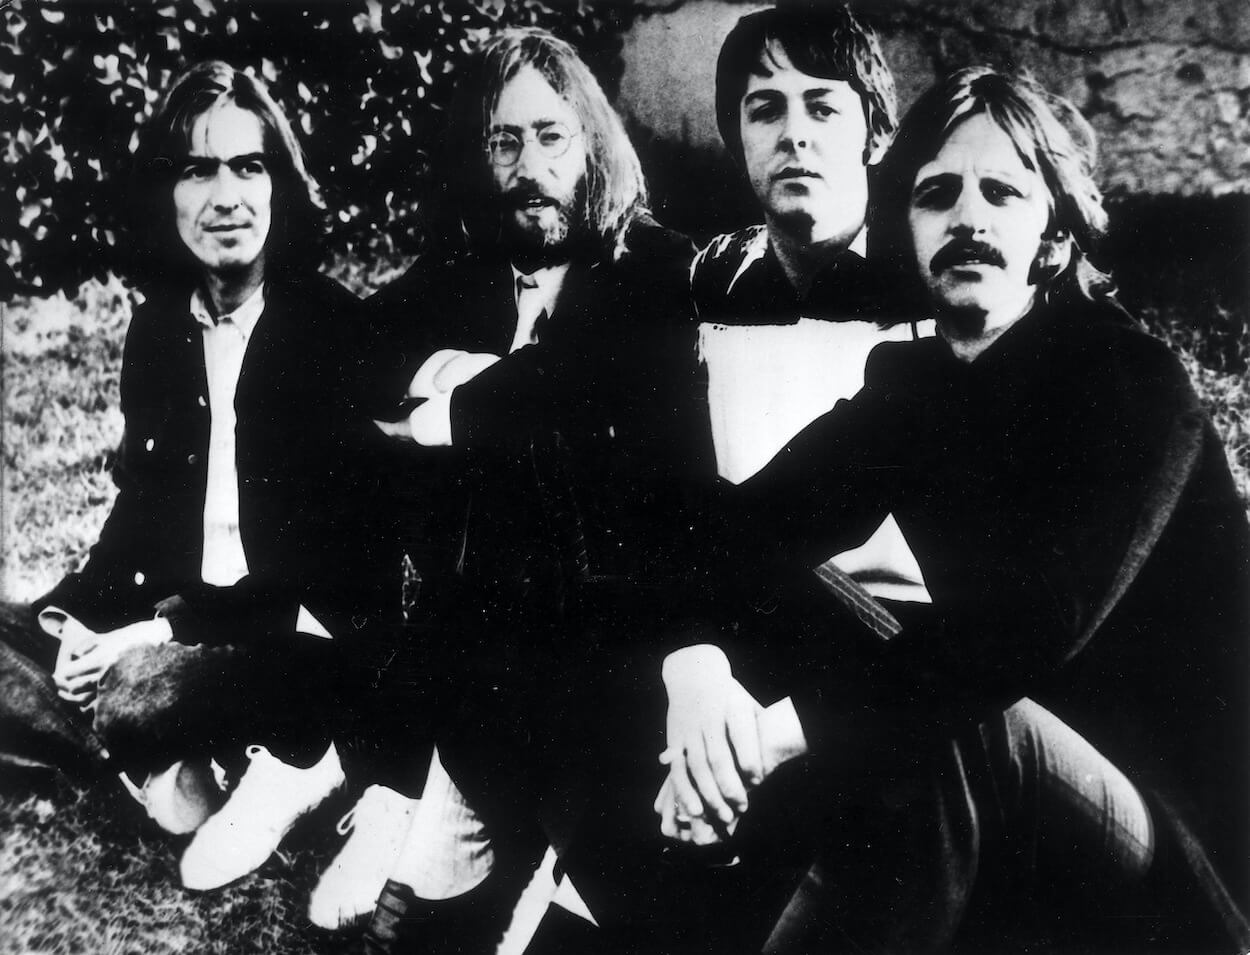 Beatles George Harrison, John Lennon, Paul McCartney, and Ringo Starr in 1970.